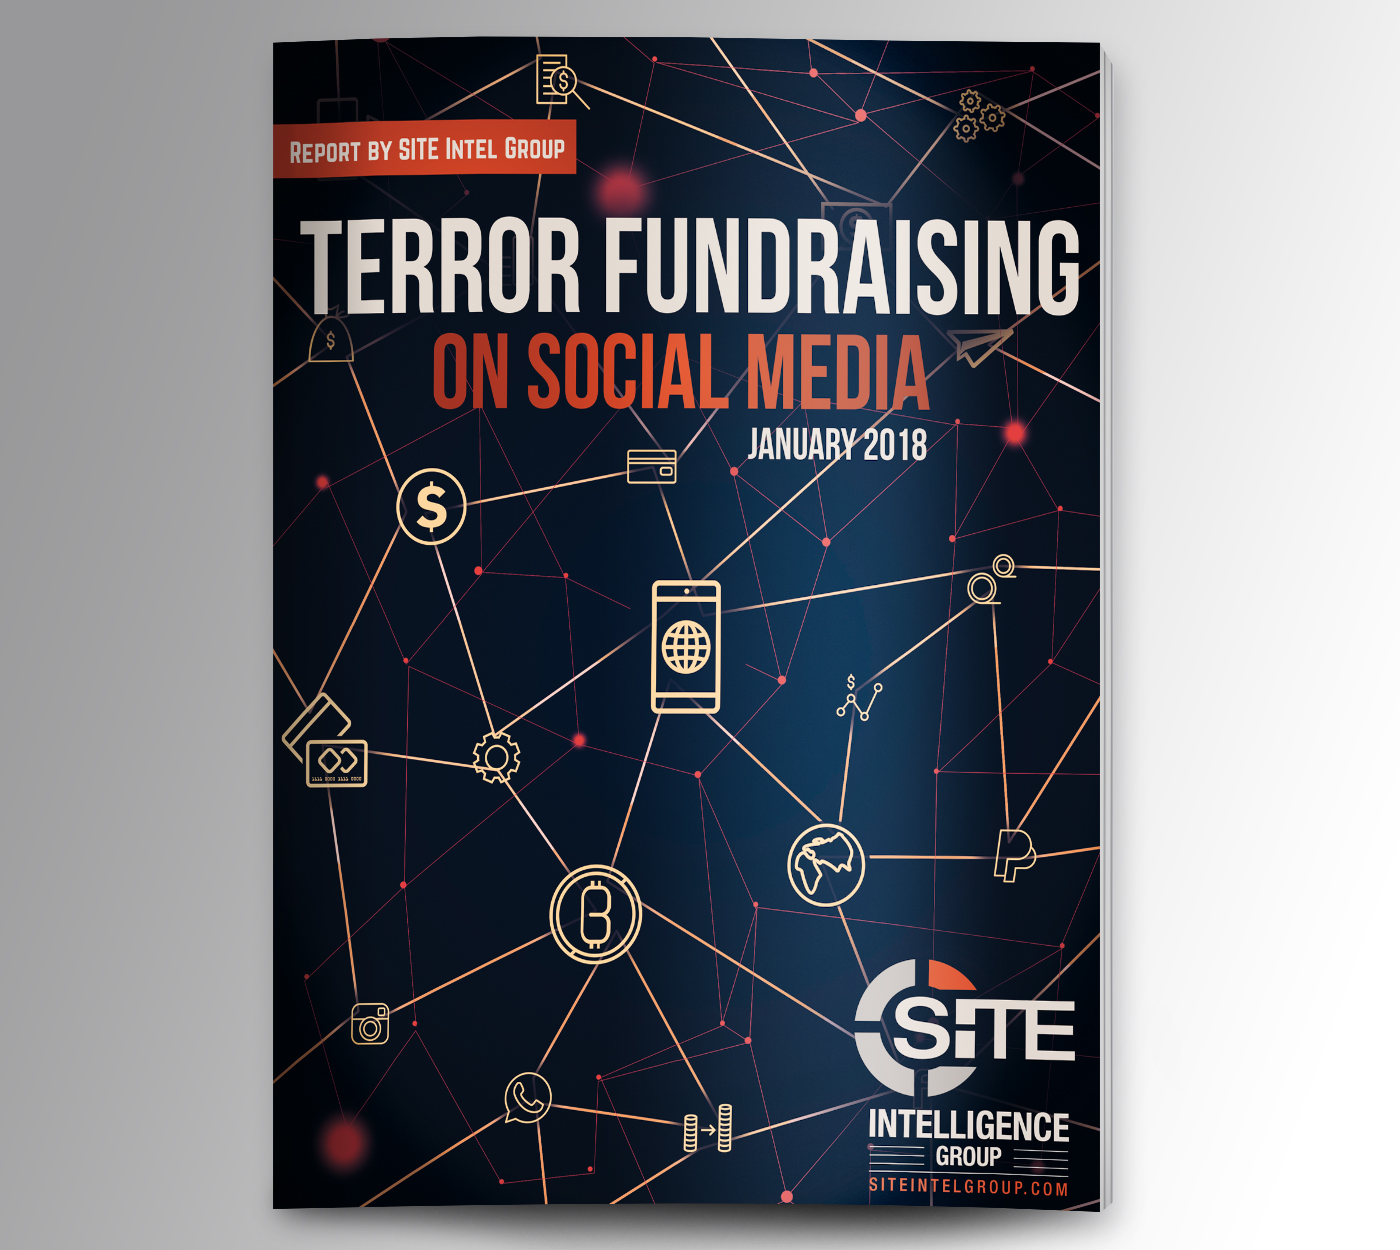 SITE’s Special Report: Terror Fundraising on Social Media